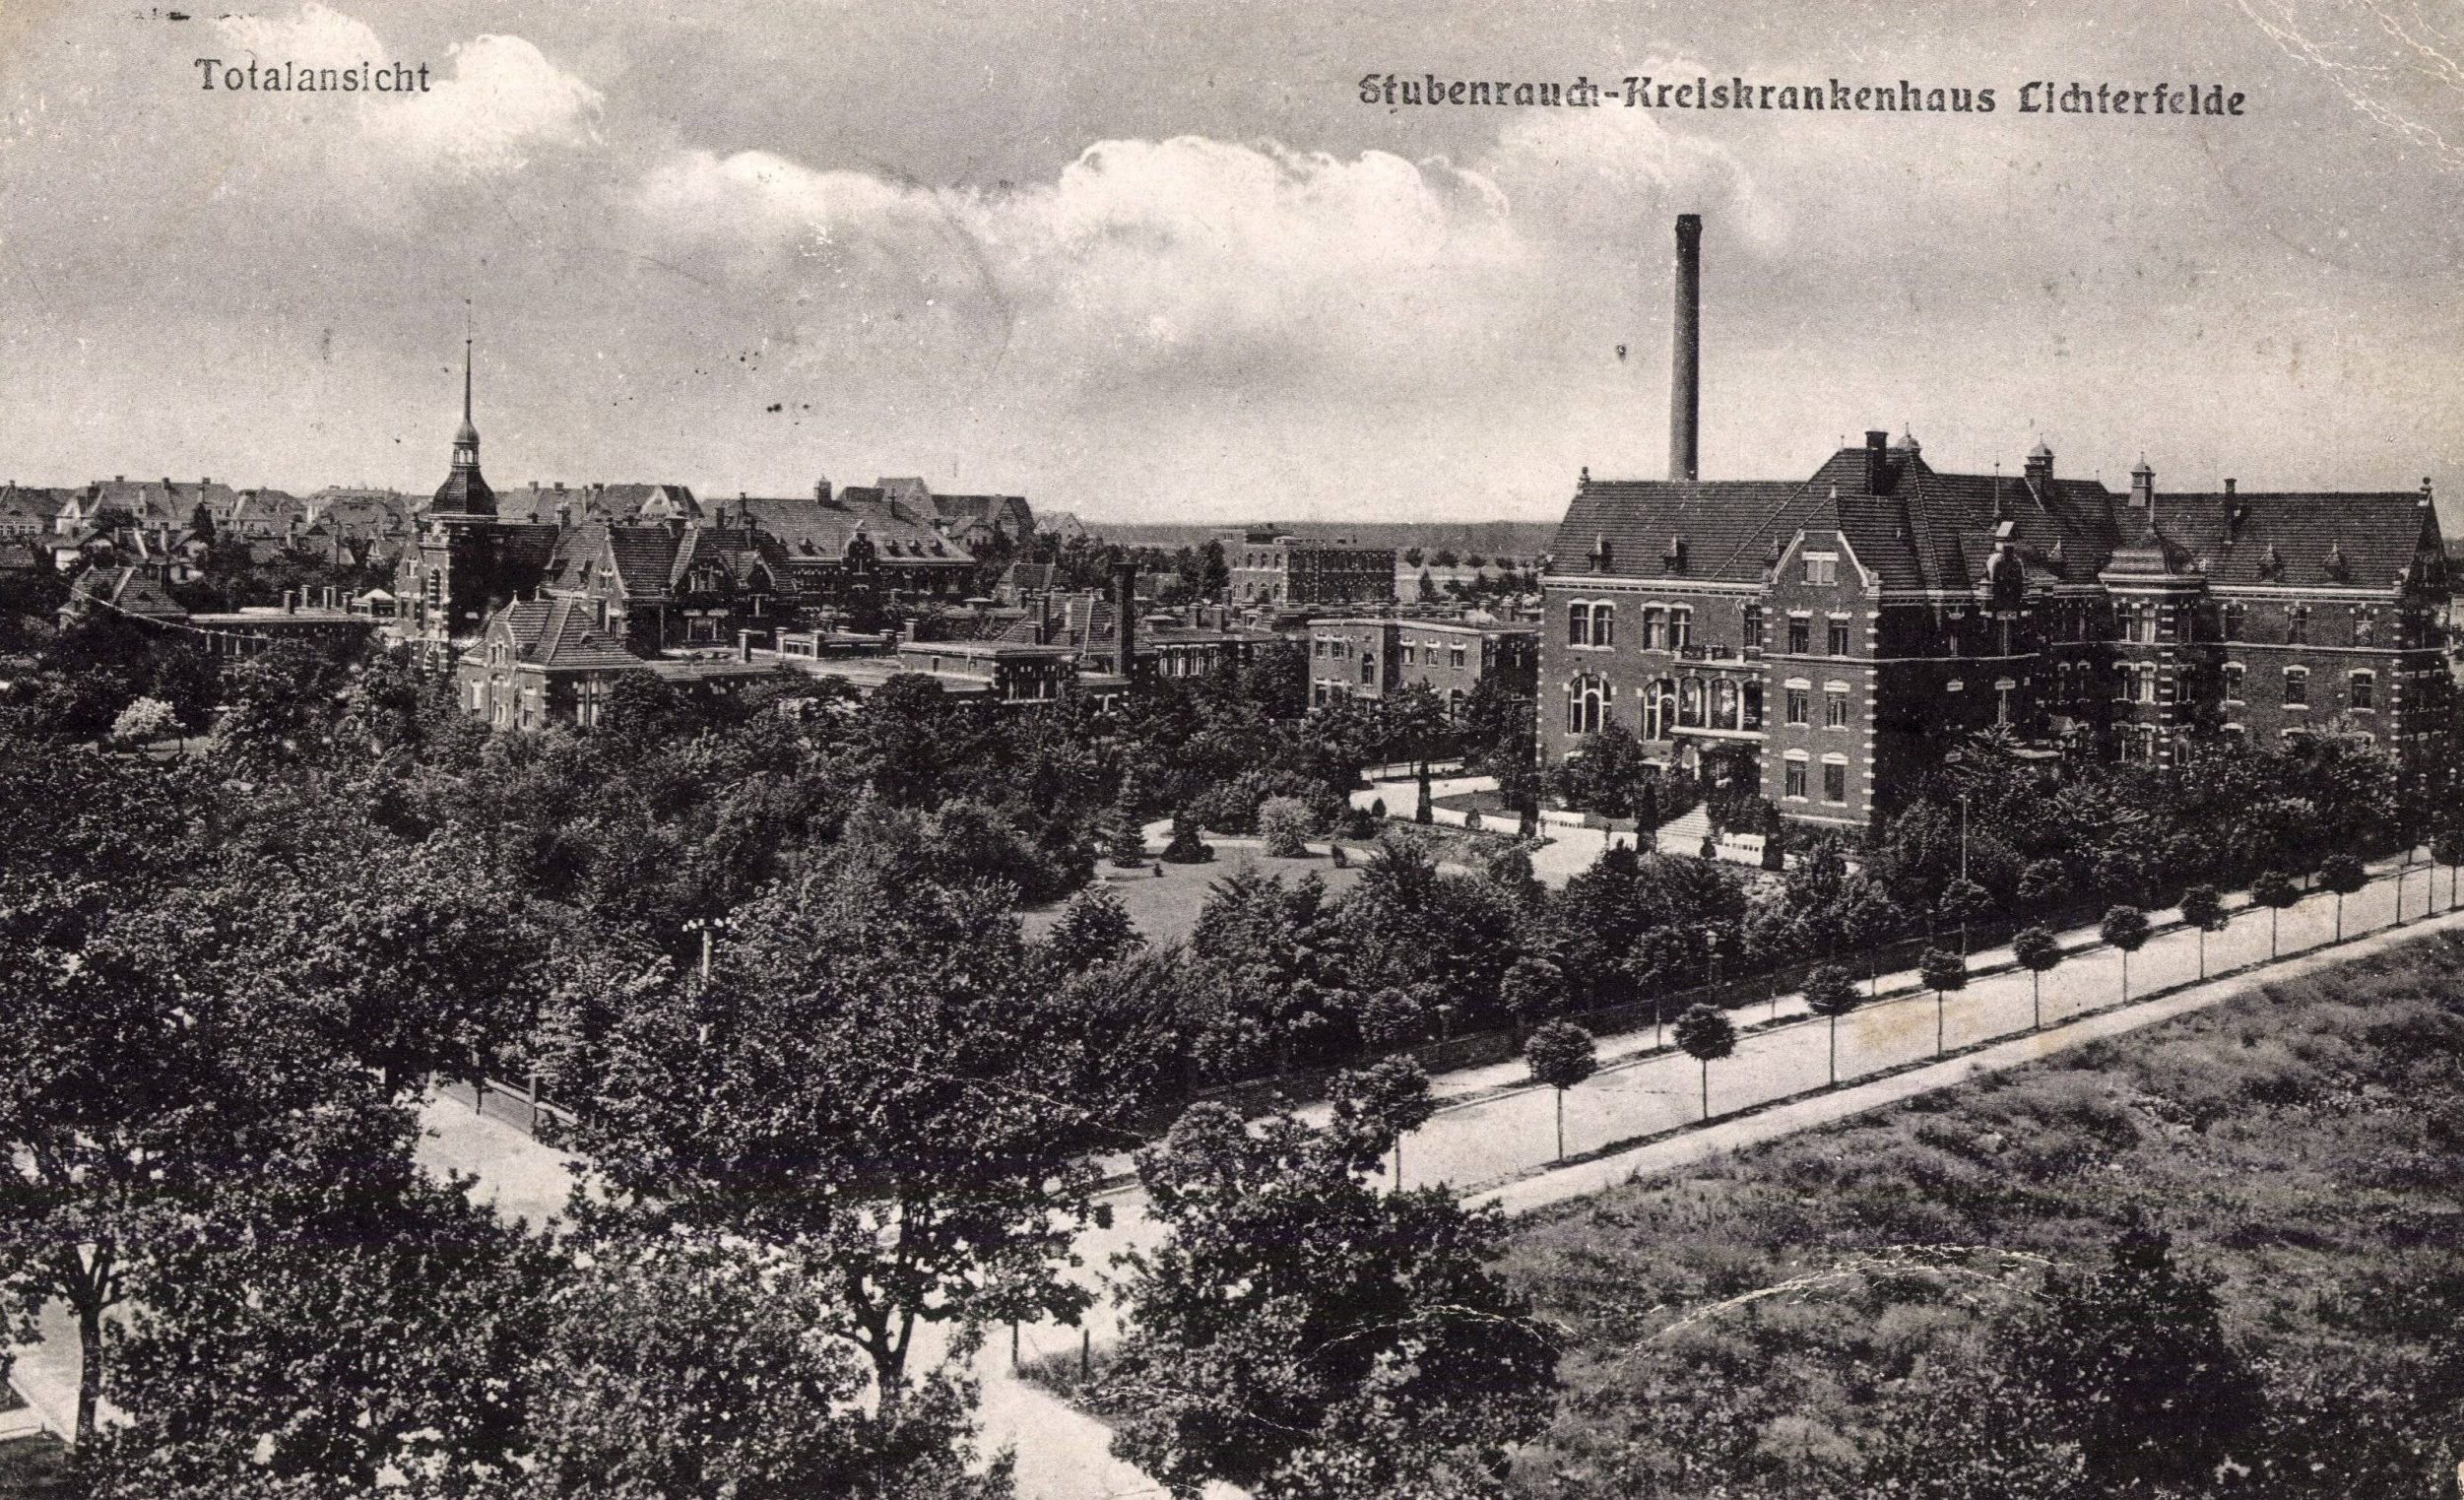 Berlin 1920: Lichterfelde, Stubenrauch Kreiskrankenhaus.